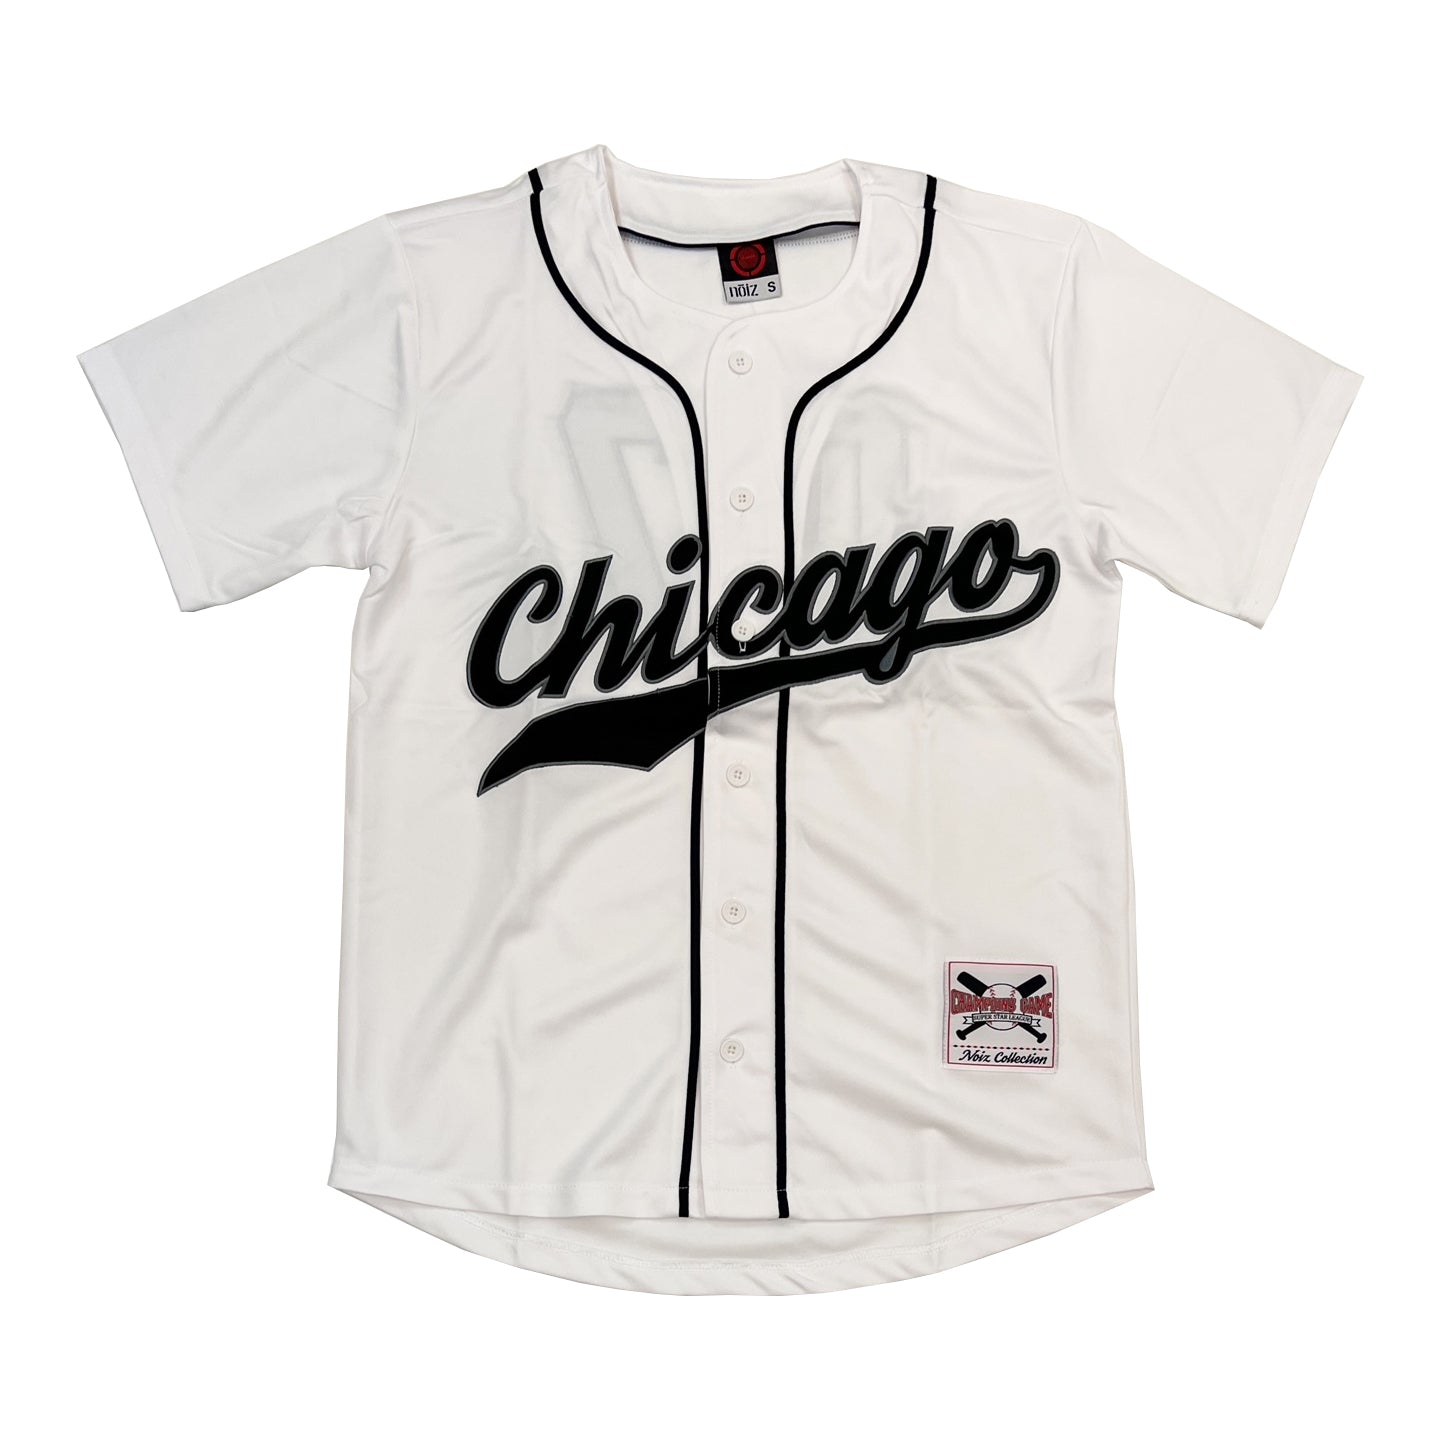 Noiz Chicago Baseball Jersey (Red/Black) S